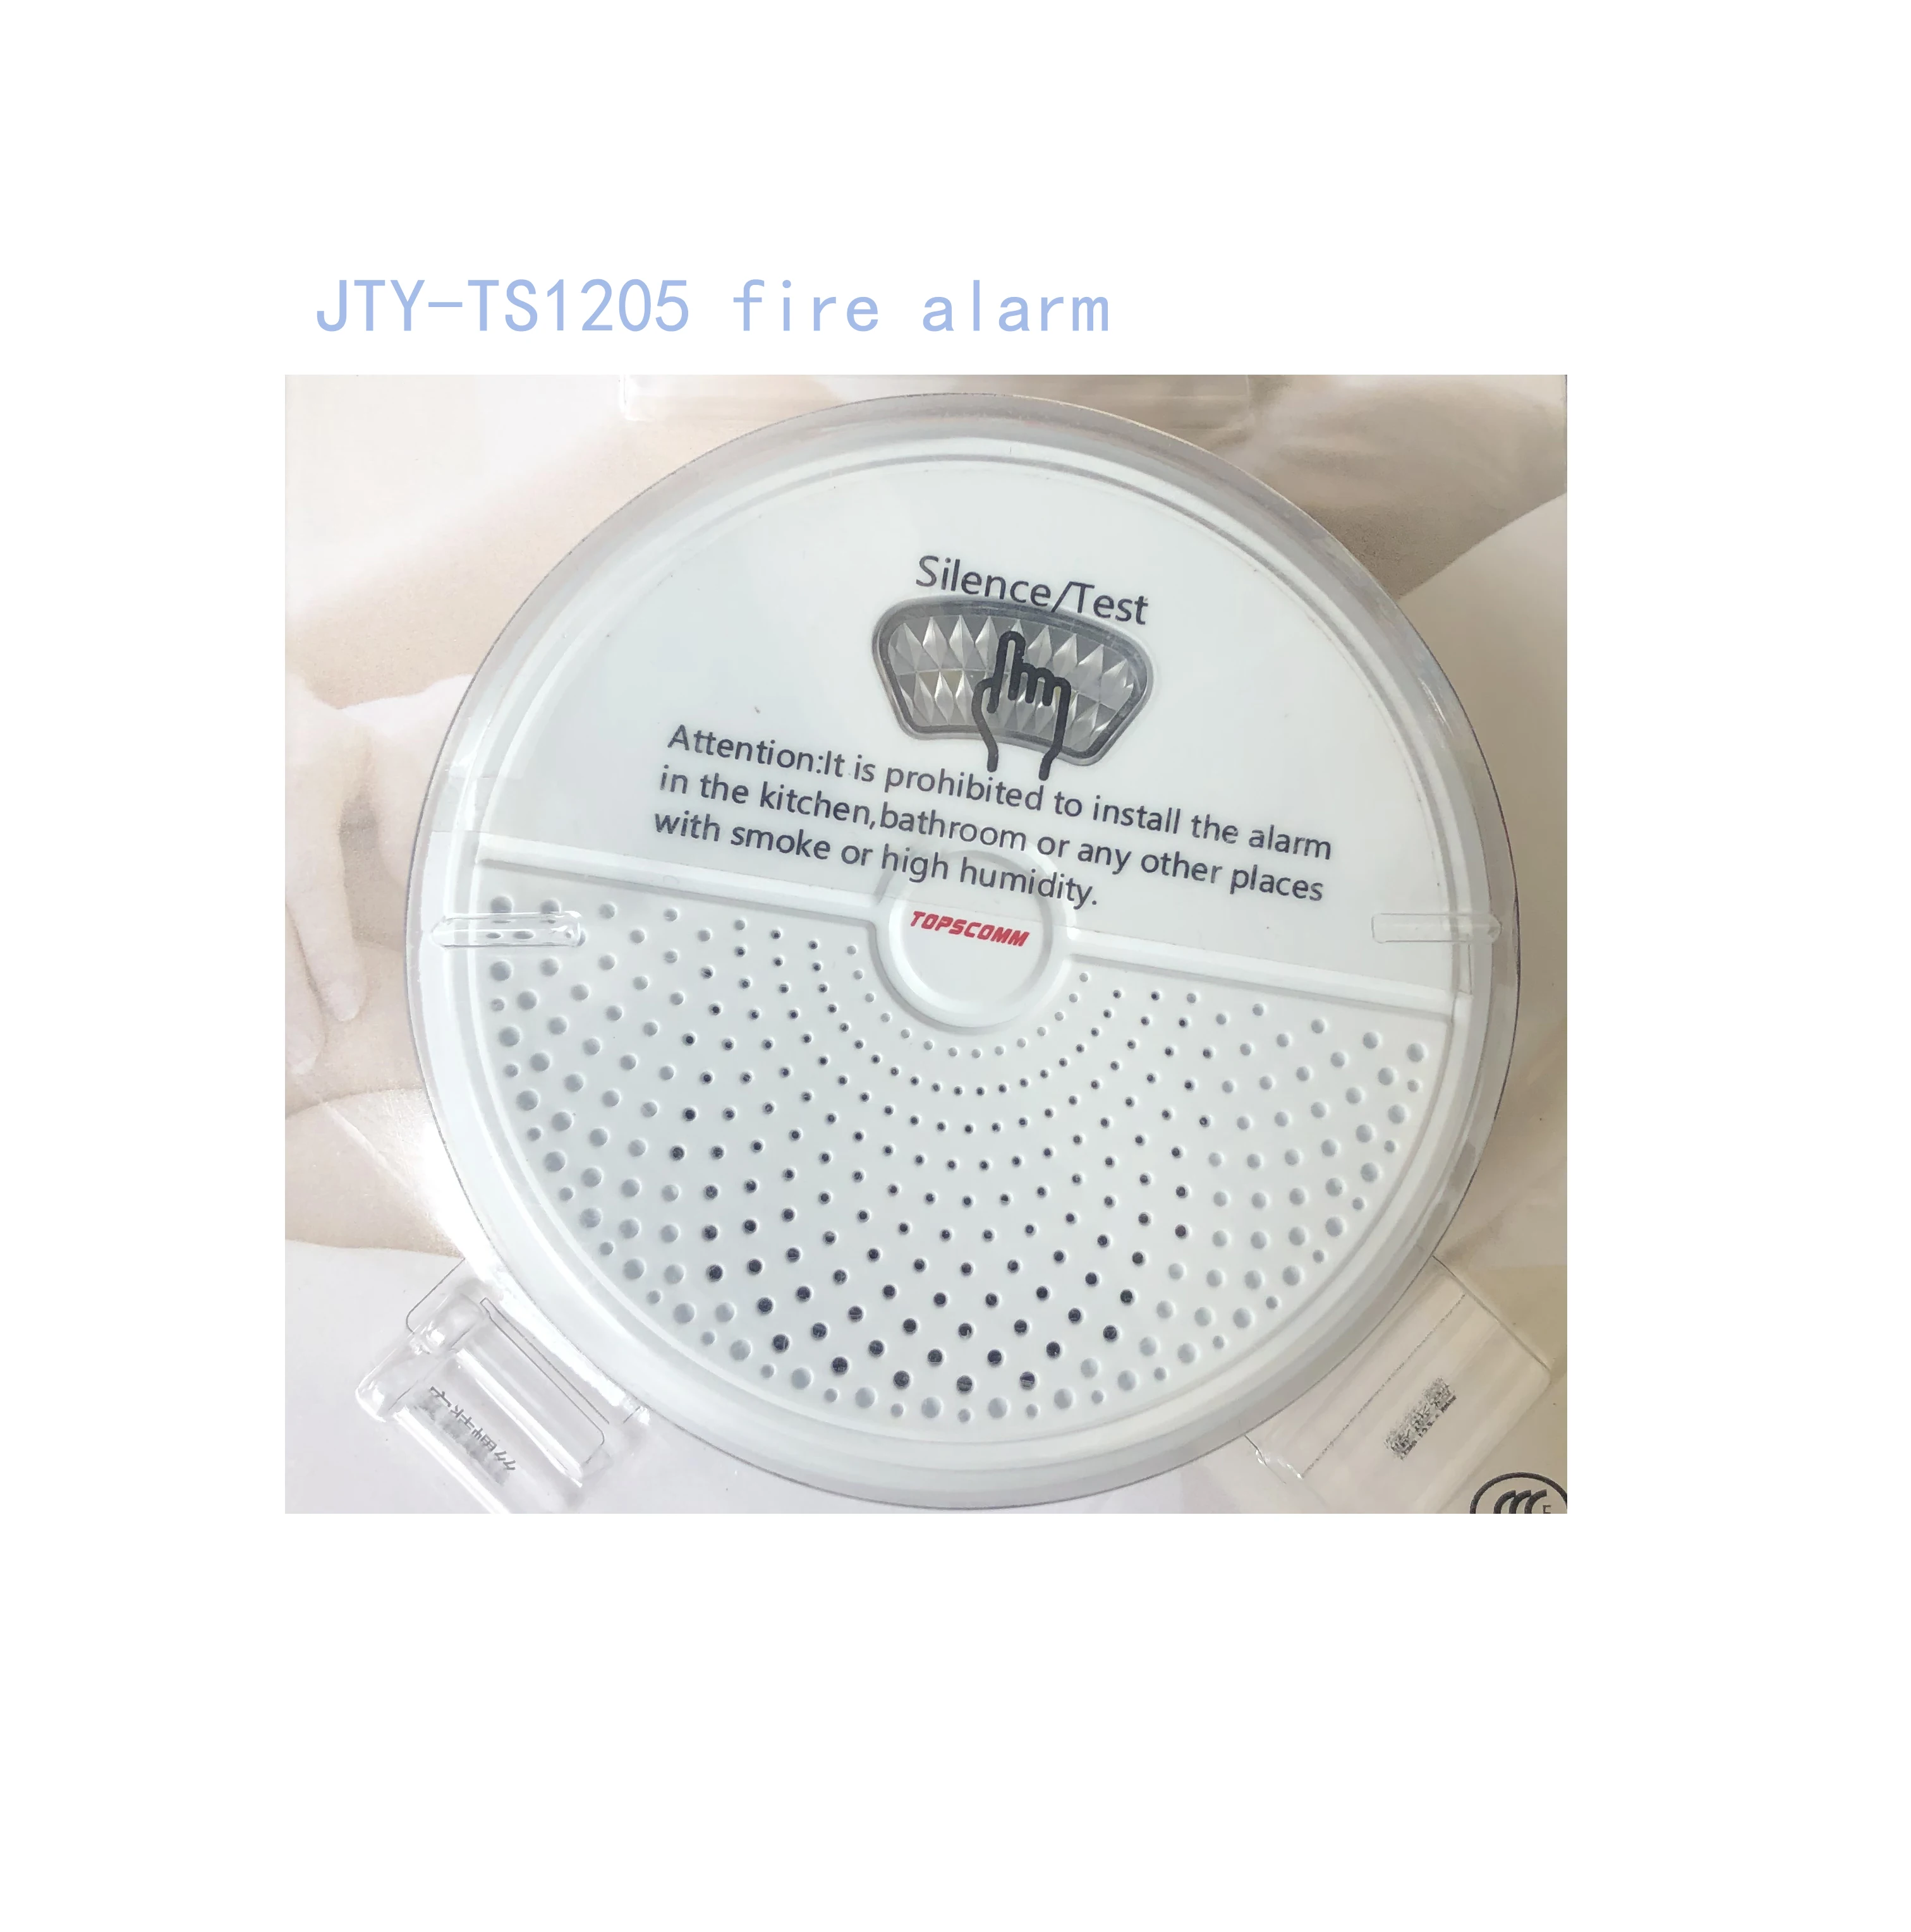 Topscomm Smart Travel Smoke Detector Zeta Fire Alarm Buy Zeta Fire Alarm Travel Smoke Alarm Smoke Detector Smart Smoke Detector Product On Alibaba Com